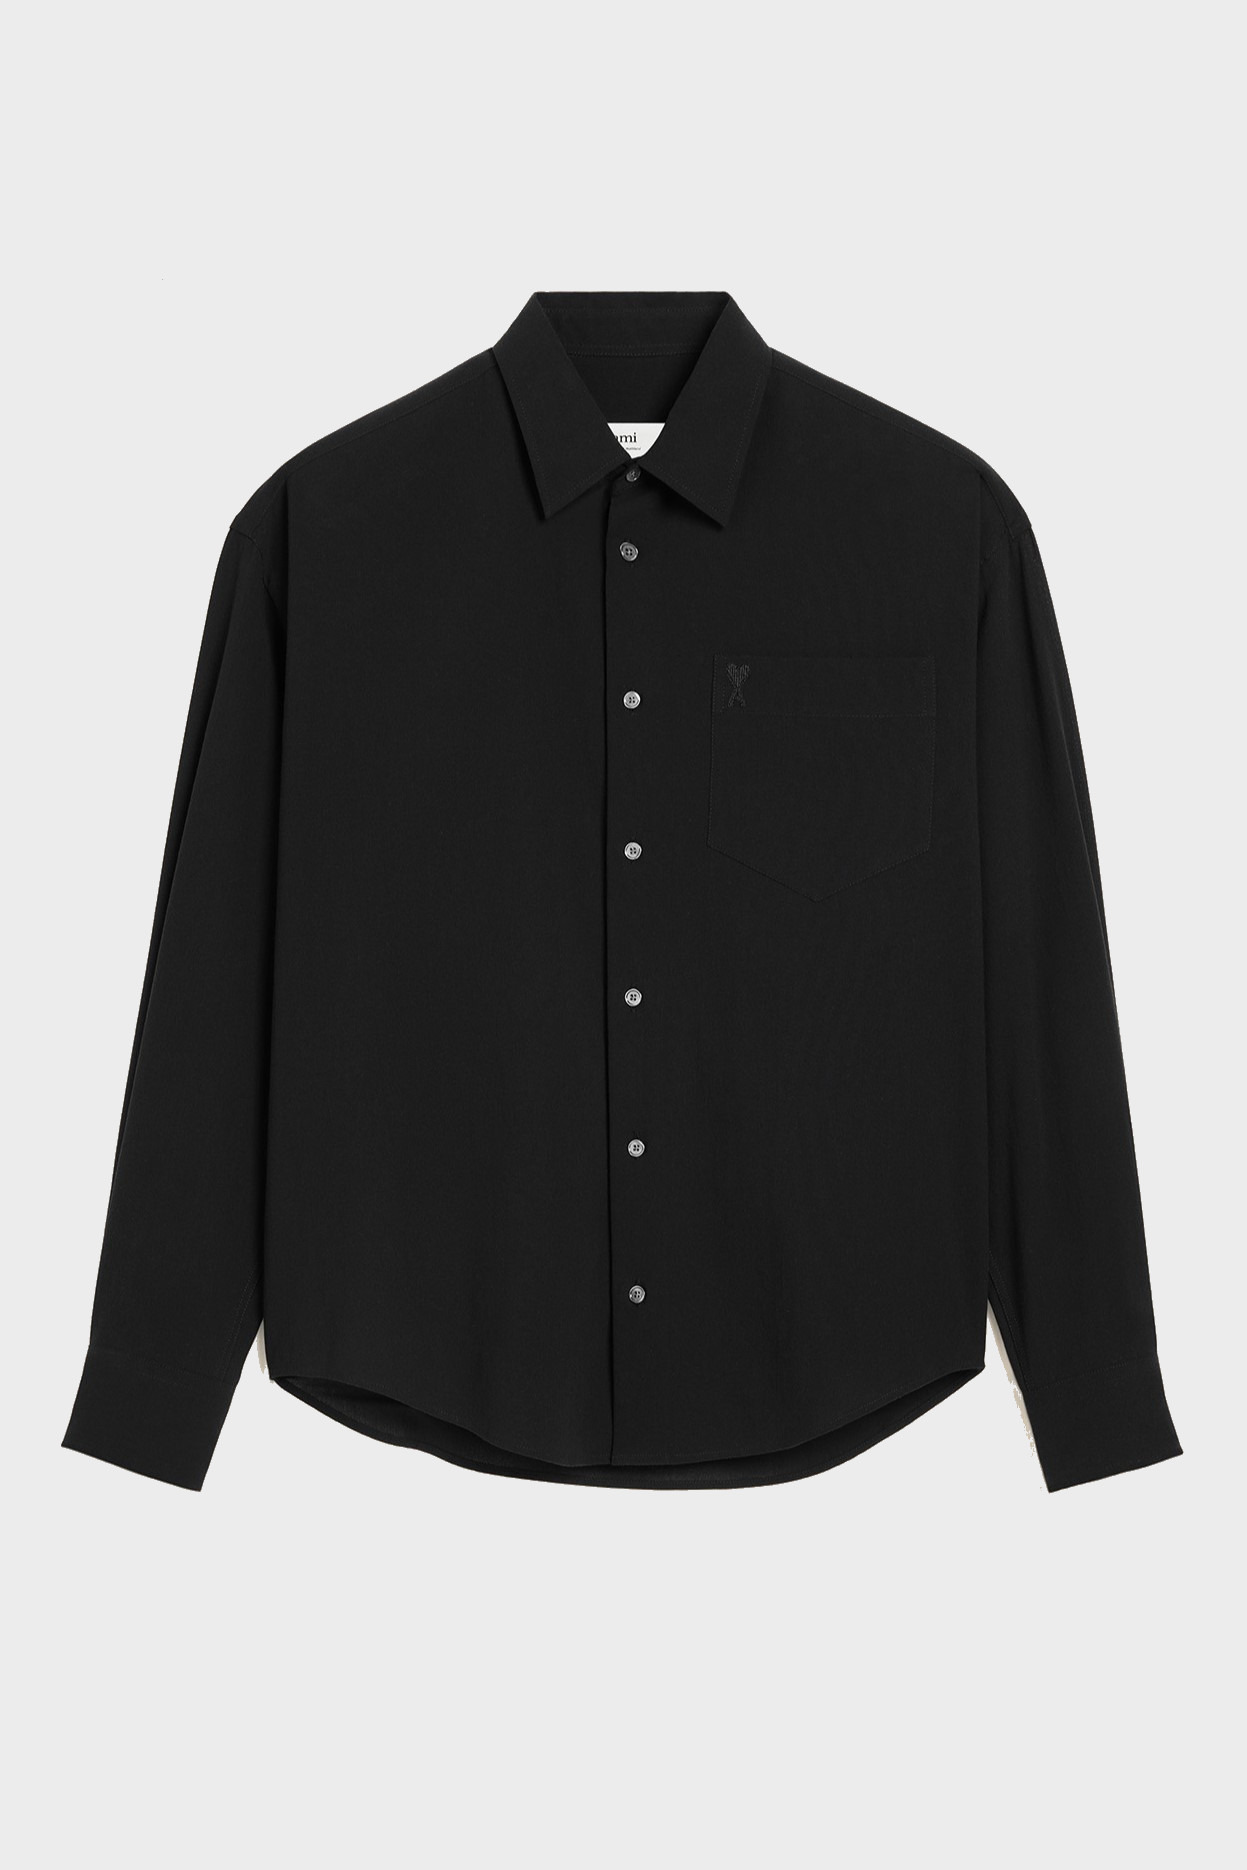 AMI PARIS De Coeur Cotton Crepe Shirt in Black